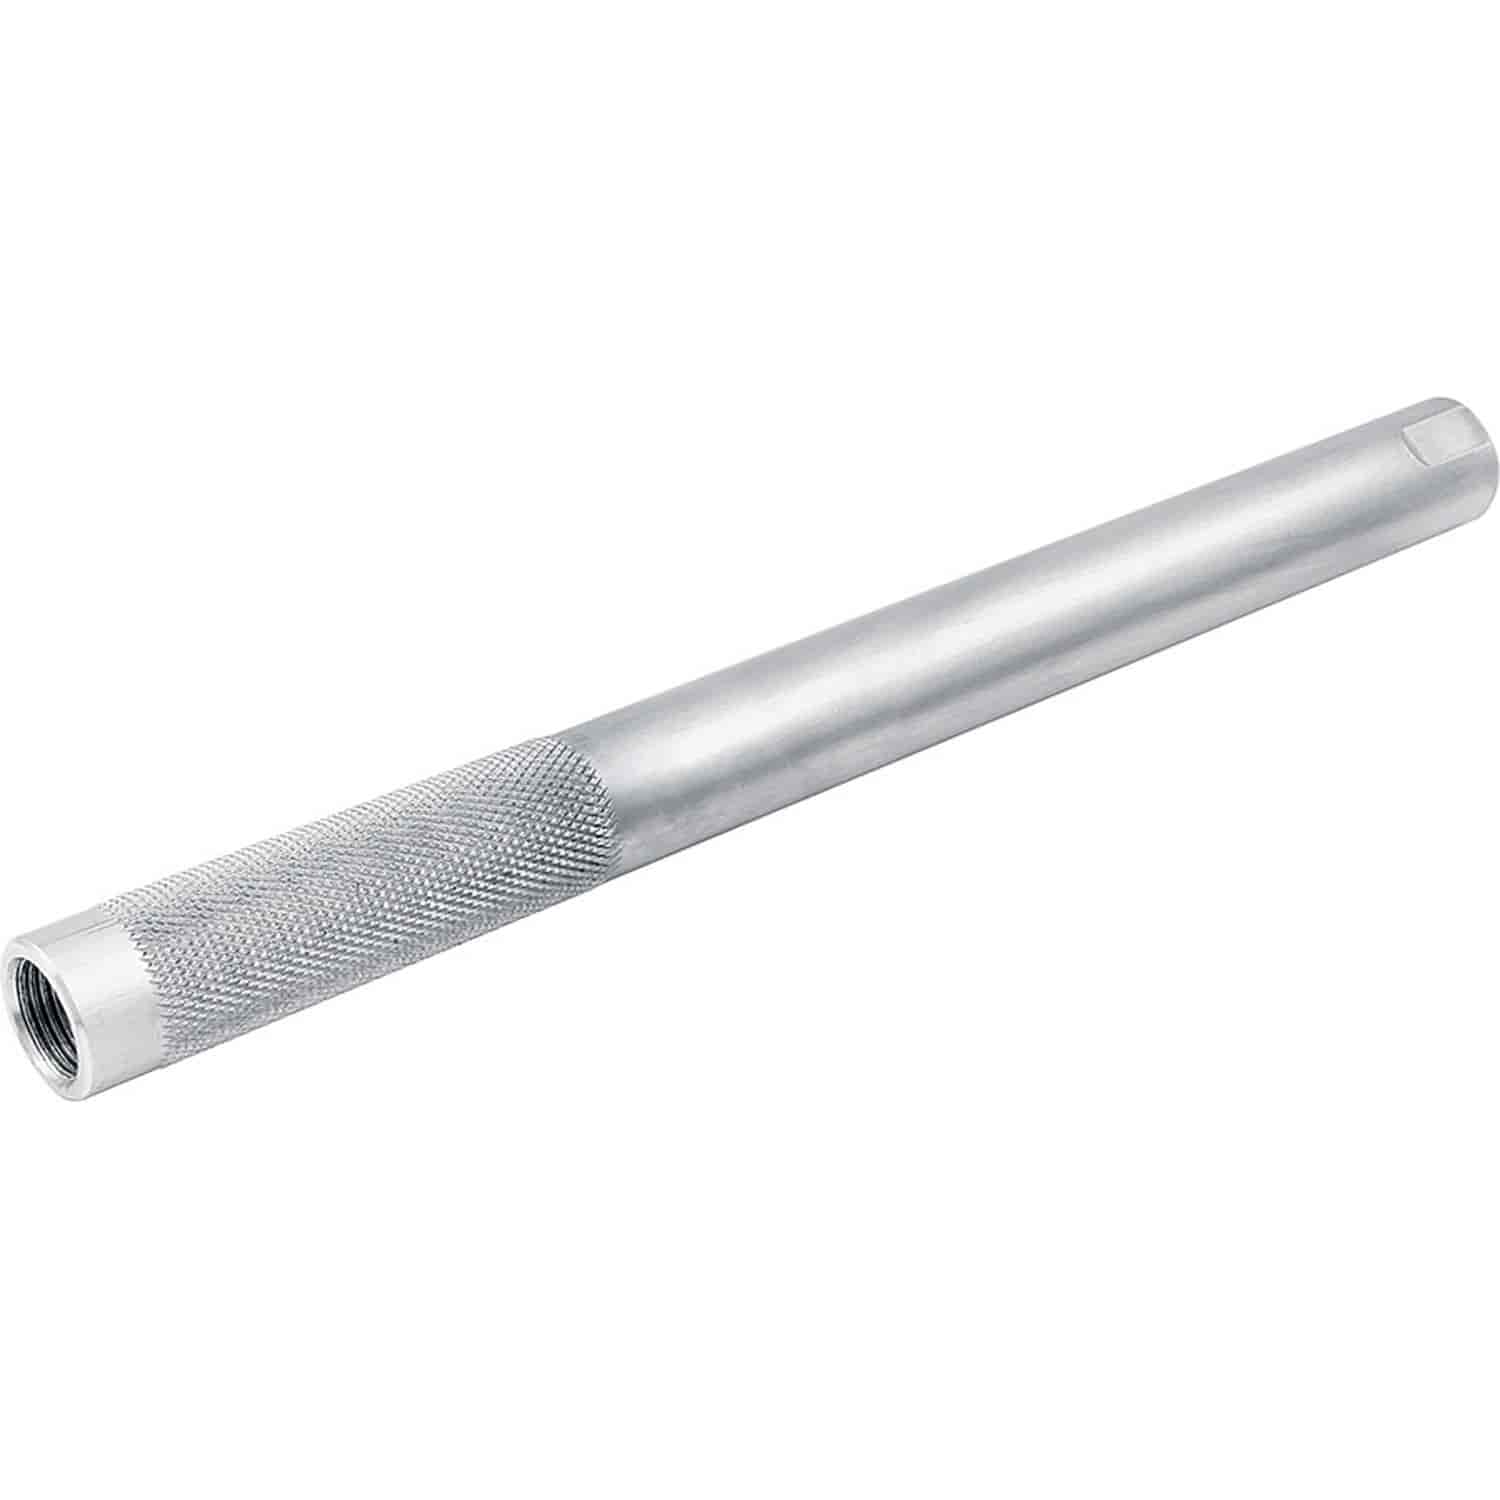 Swedged Aluminum Tie Rod Tube Length: 29"